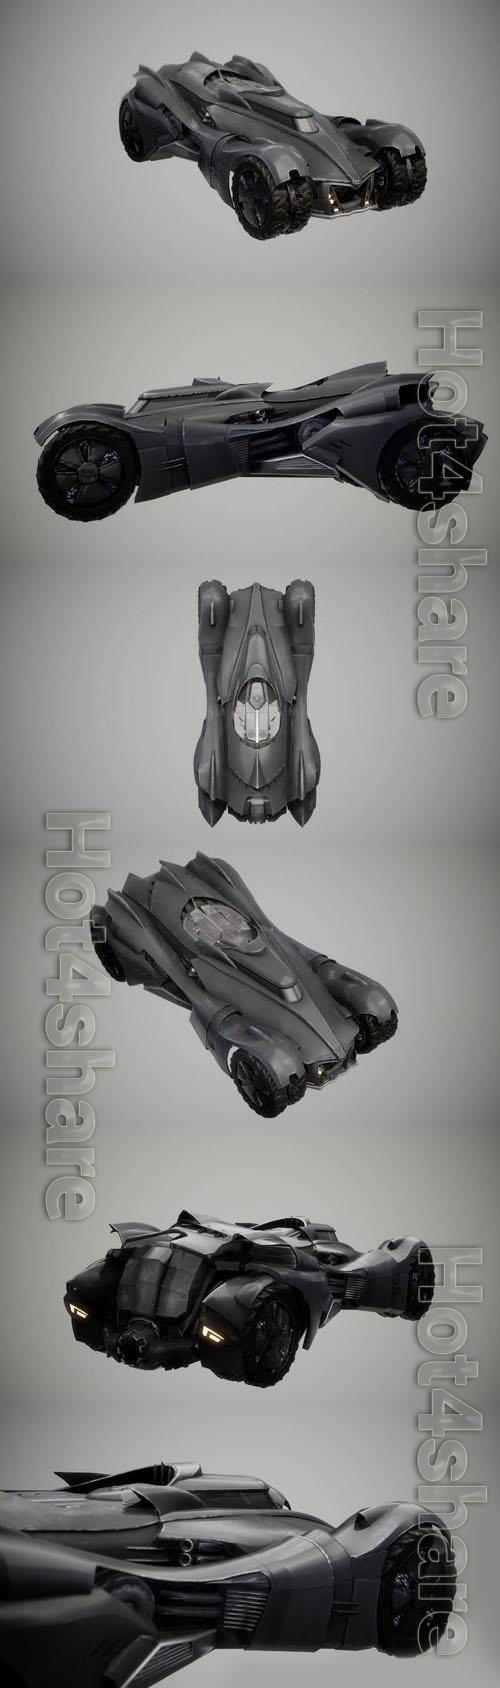 Batmobile from batman arkham knight - 3d model